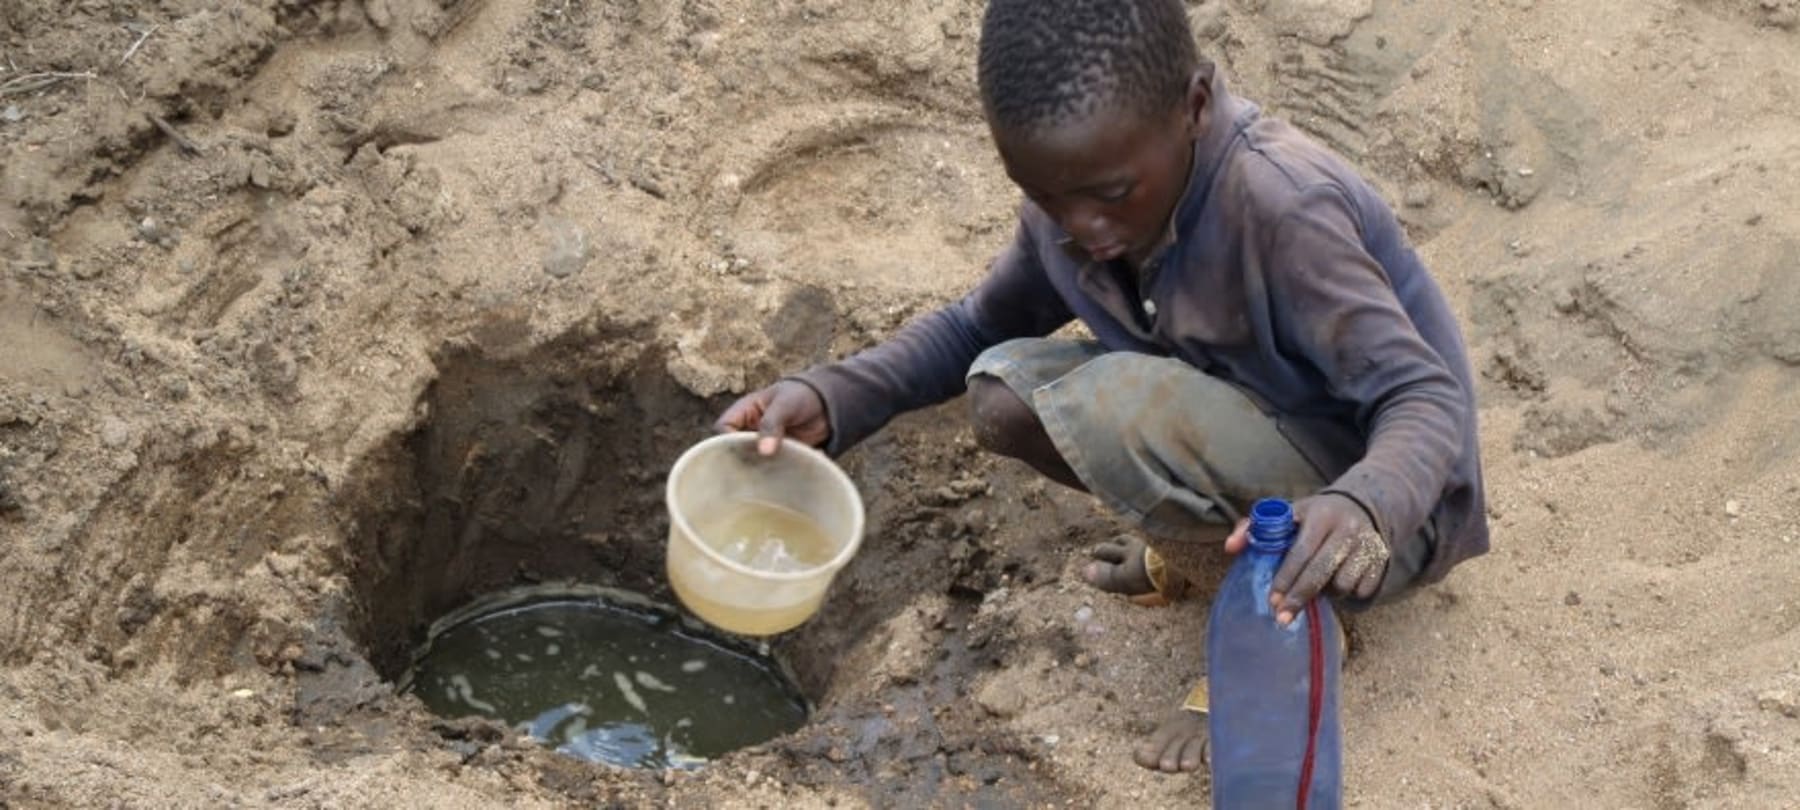 525,000 children die each year from drinking dirty water resources